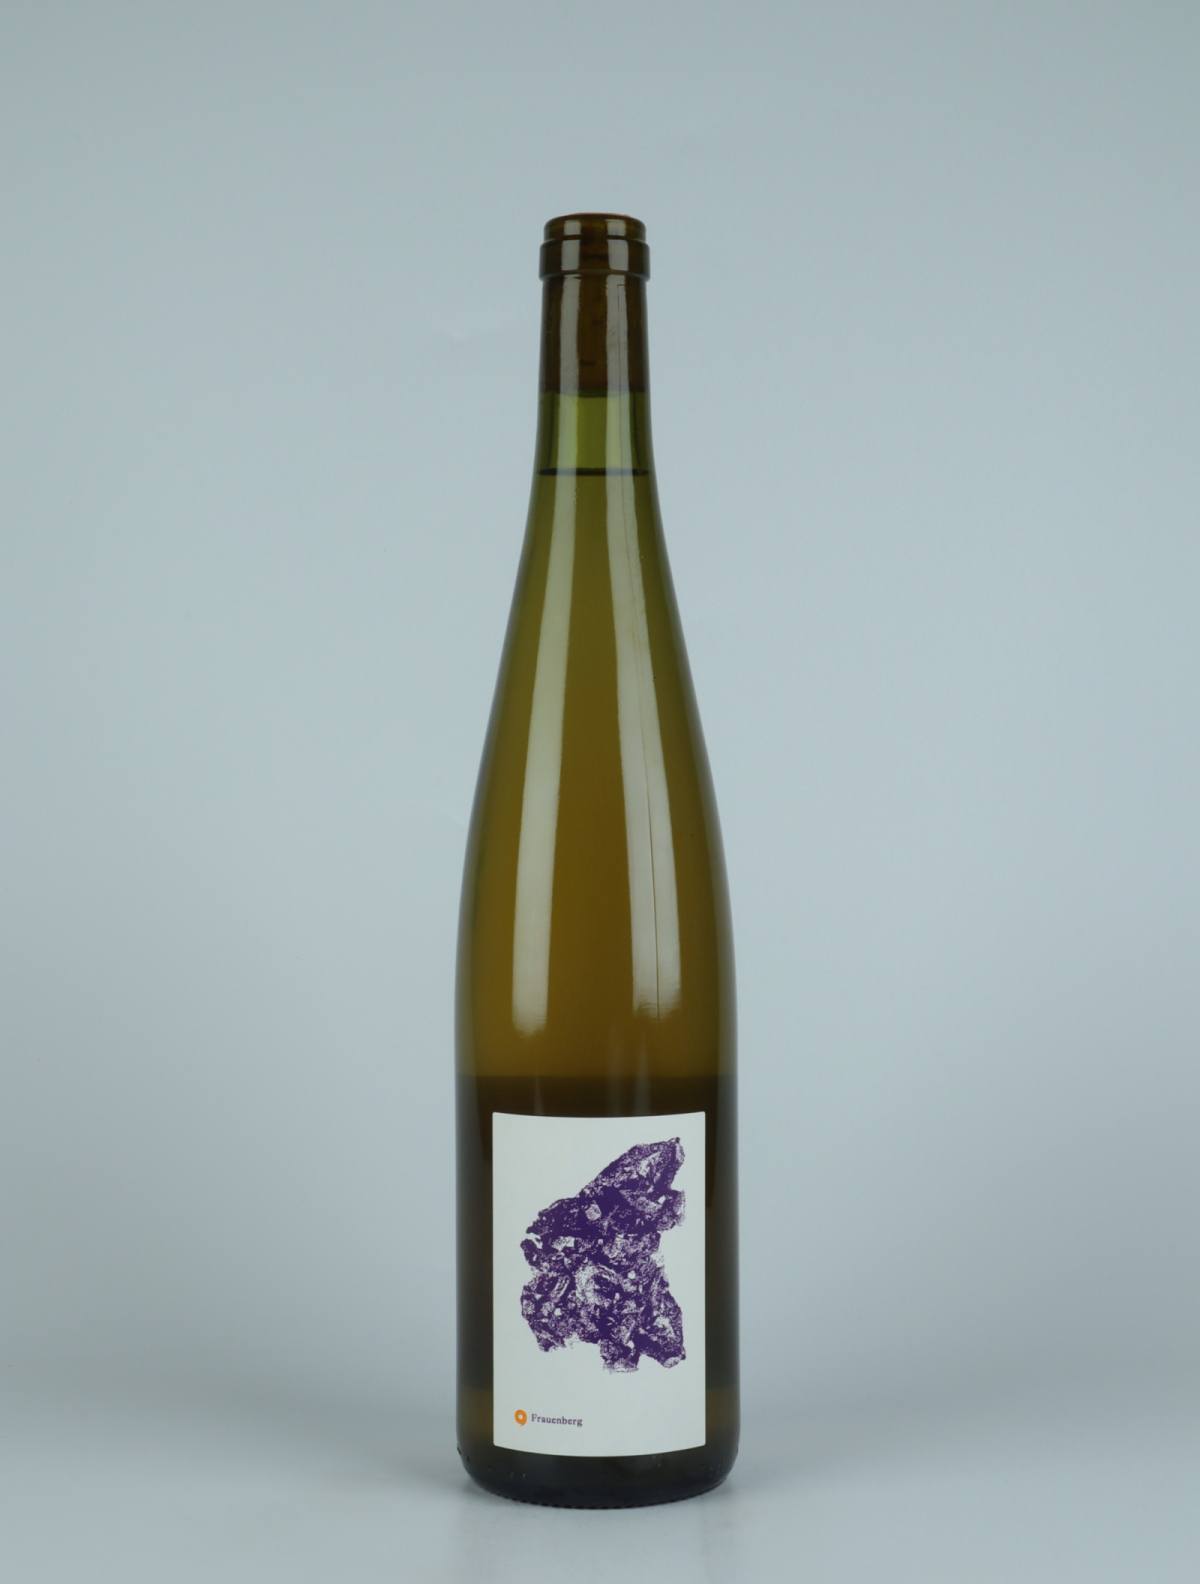 A bottle 2021 Frauenberg White wine from Léonard Dietrich, Alsace in France